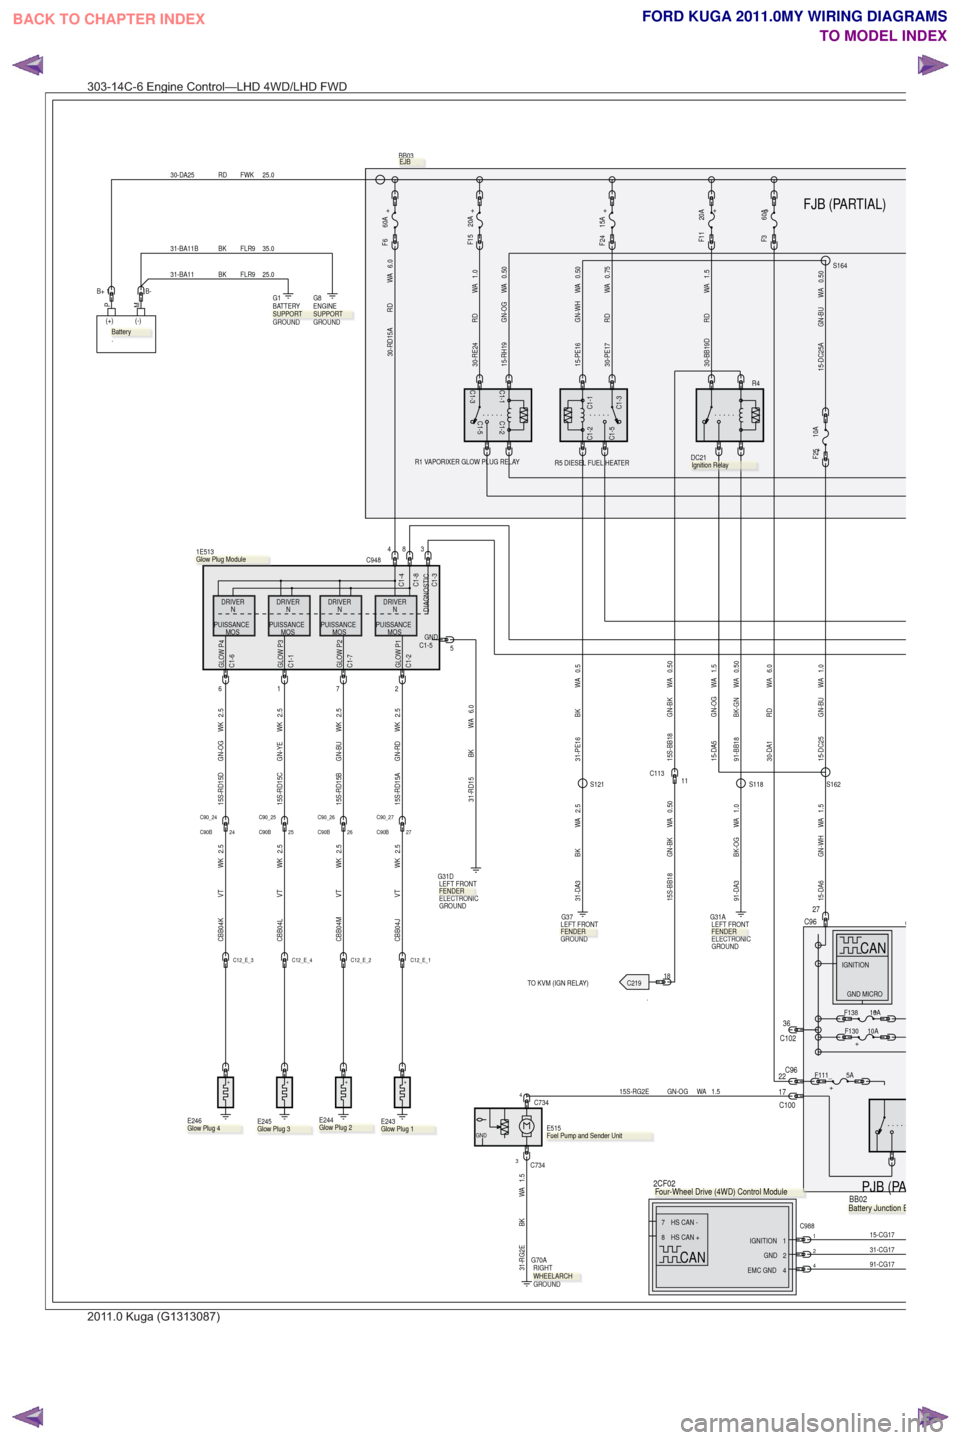 FORD KUGA 2011 1.G Wiring Diagram Workshop Manual .TO KVM (IGN RELAY)
FJB (PARTIAL)
PJB (PA
+60AF6
BB03.
PM
(+) (-)
.
25.0
FWK
RD
30-DA25
+
E244
.
+
.
E246
+
.
E245
+
.
E243
C1-5
C1-1C1-3
C1-2
R5 DIESEL FUEL HEATER
+15AF24
30-PE17 RD WA 0.75
C102 36
